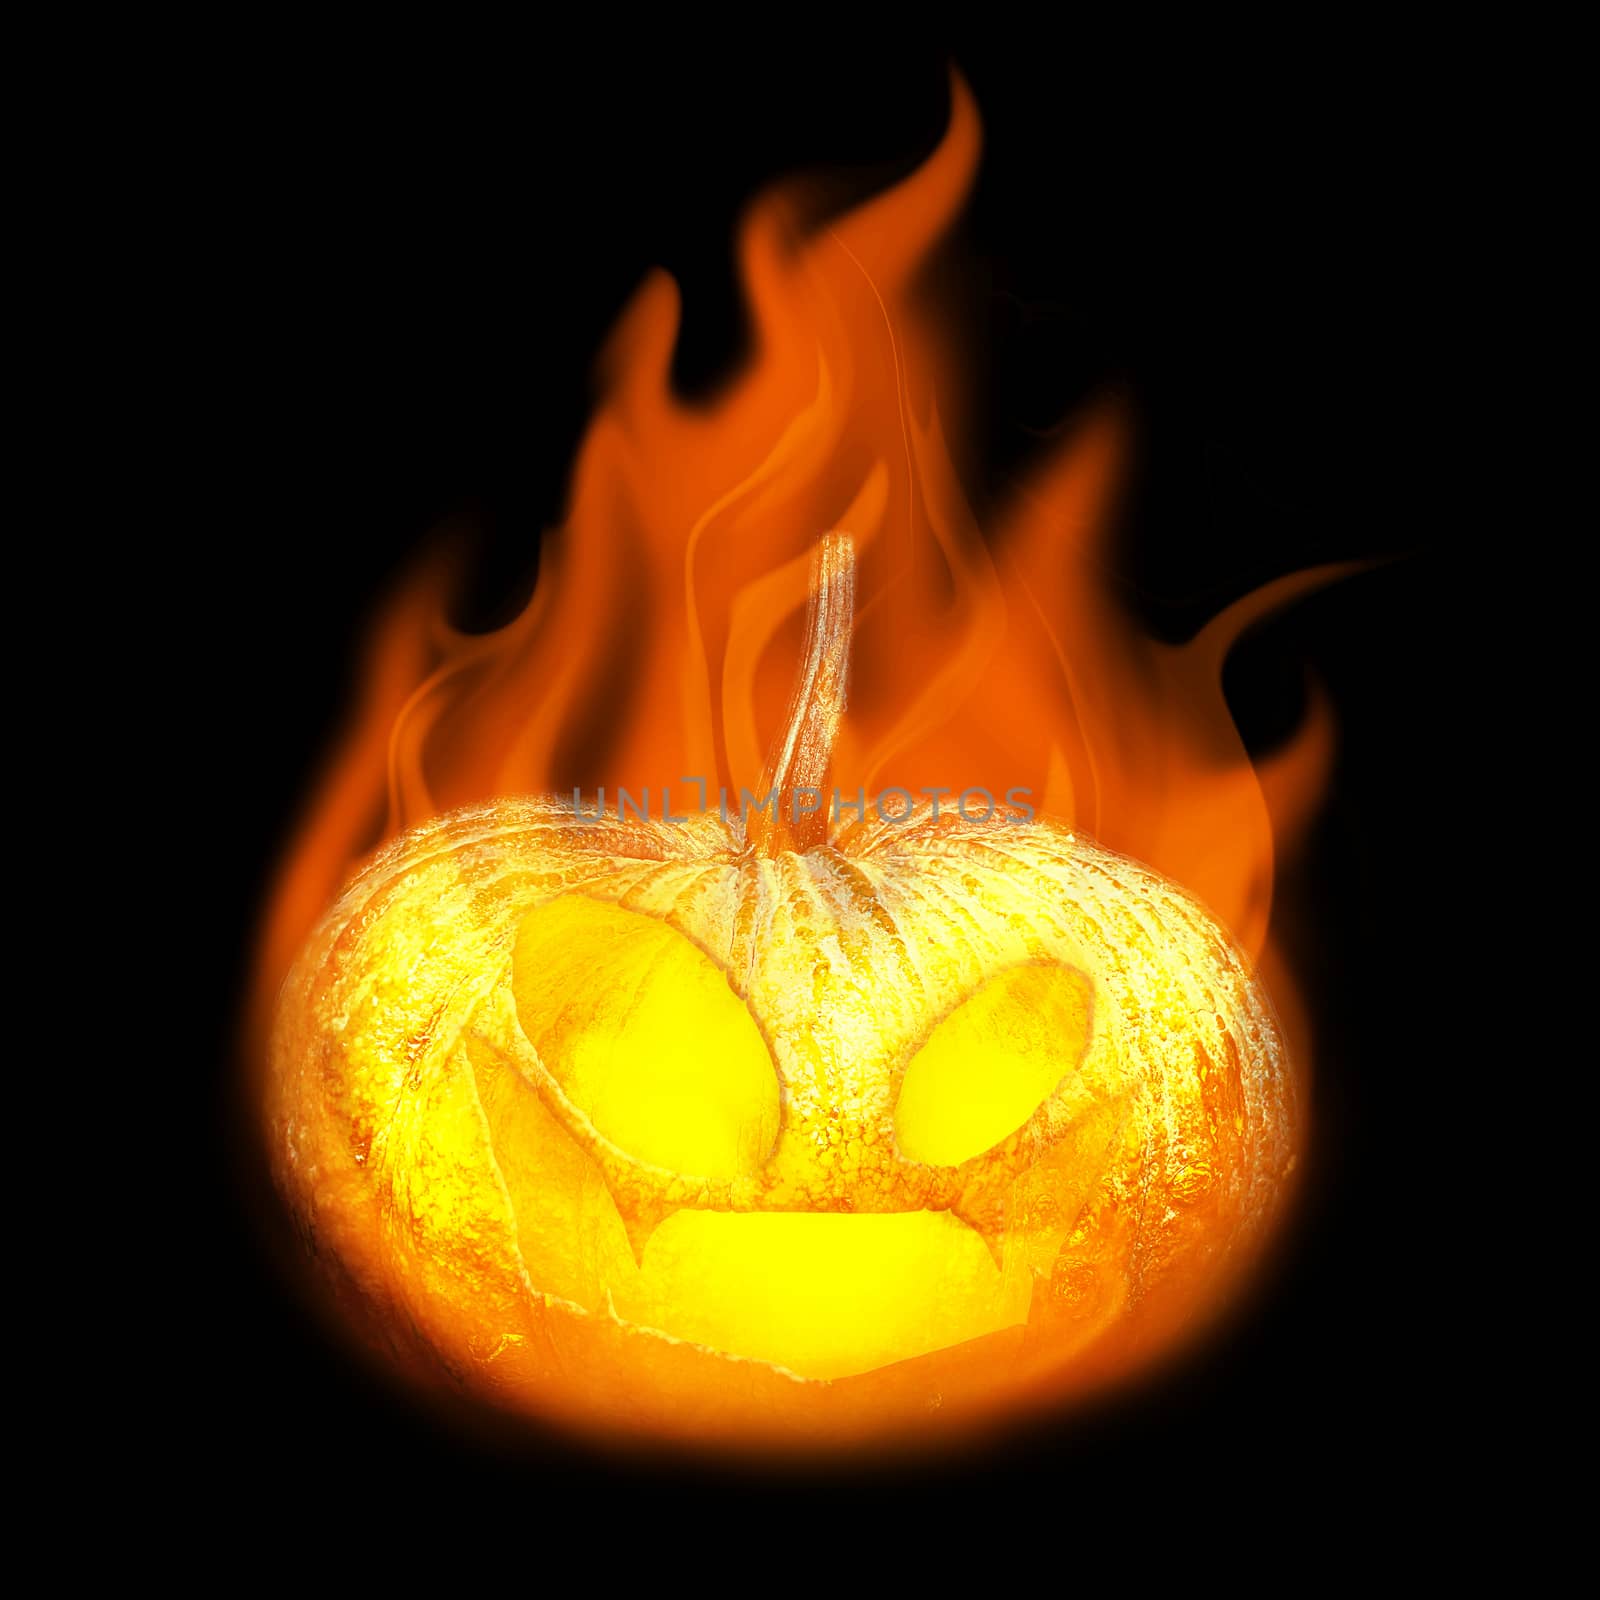 Halloween pumpkin with fire on black background